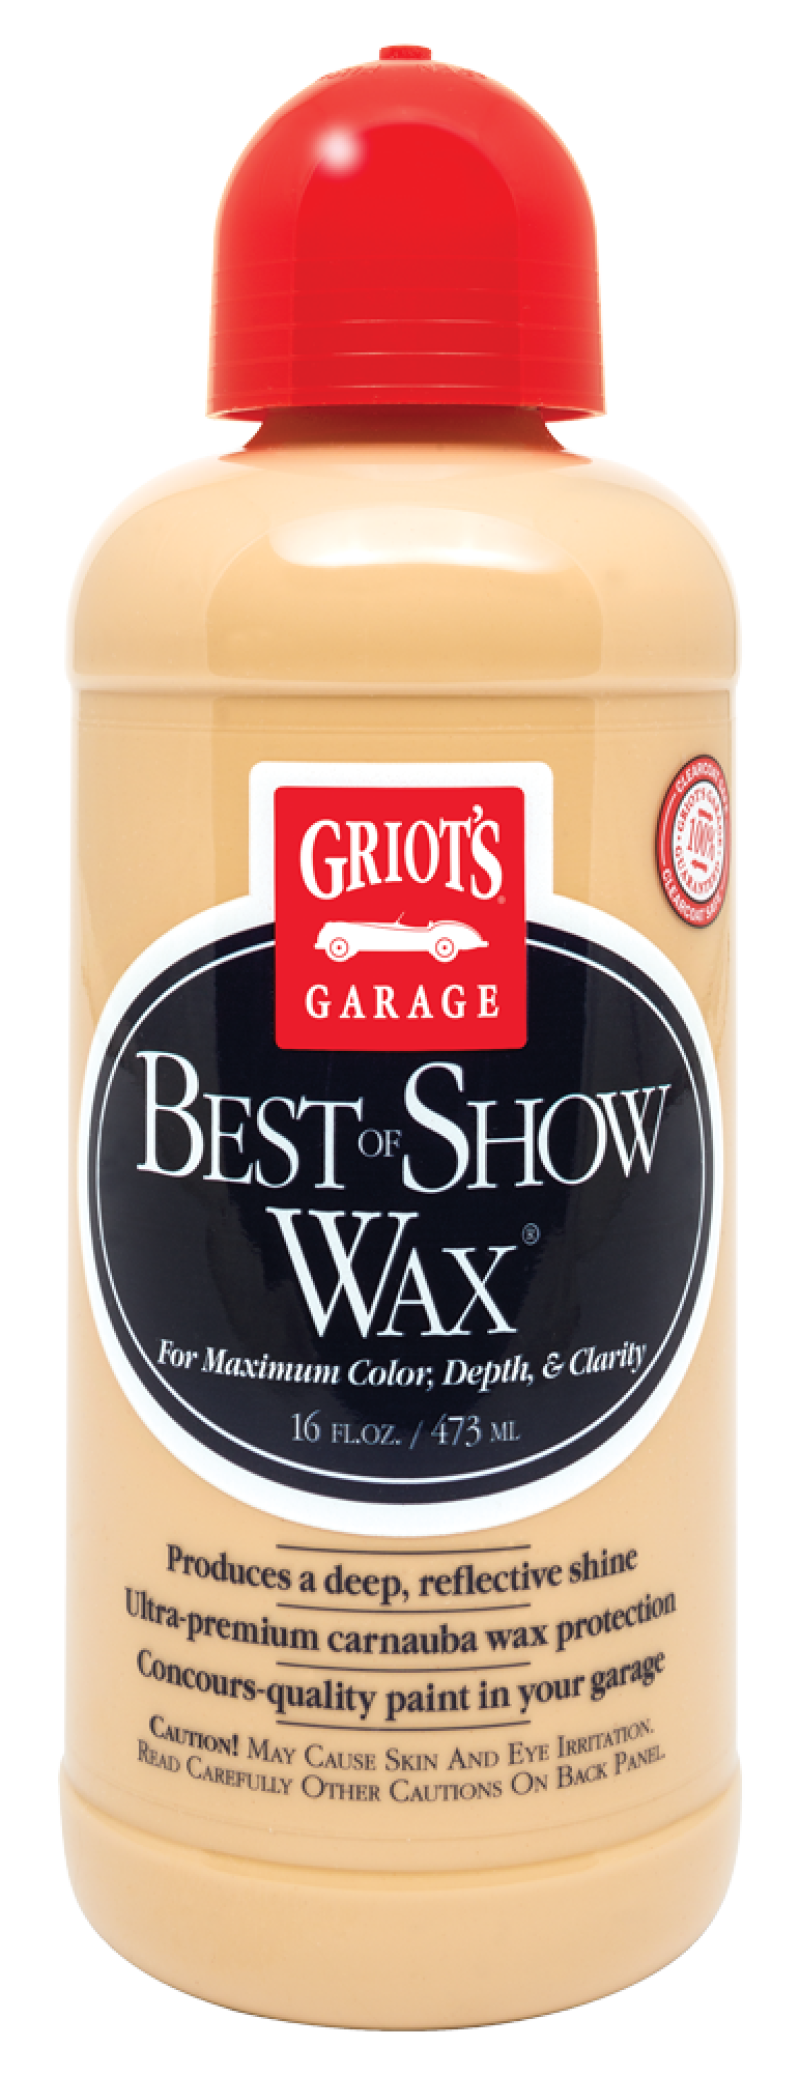 GRIOT'S GARAGE Best of Show Wax - 16oz - Case of 12